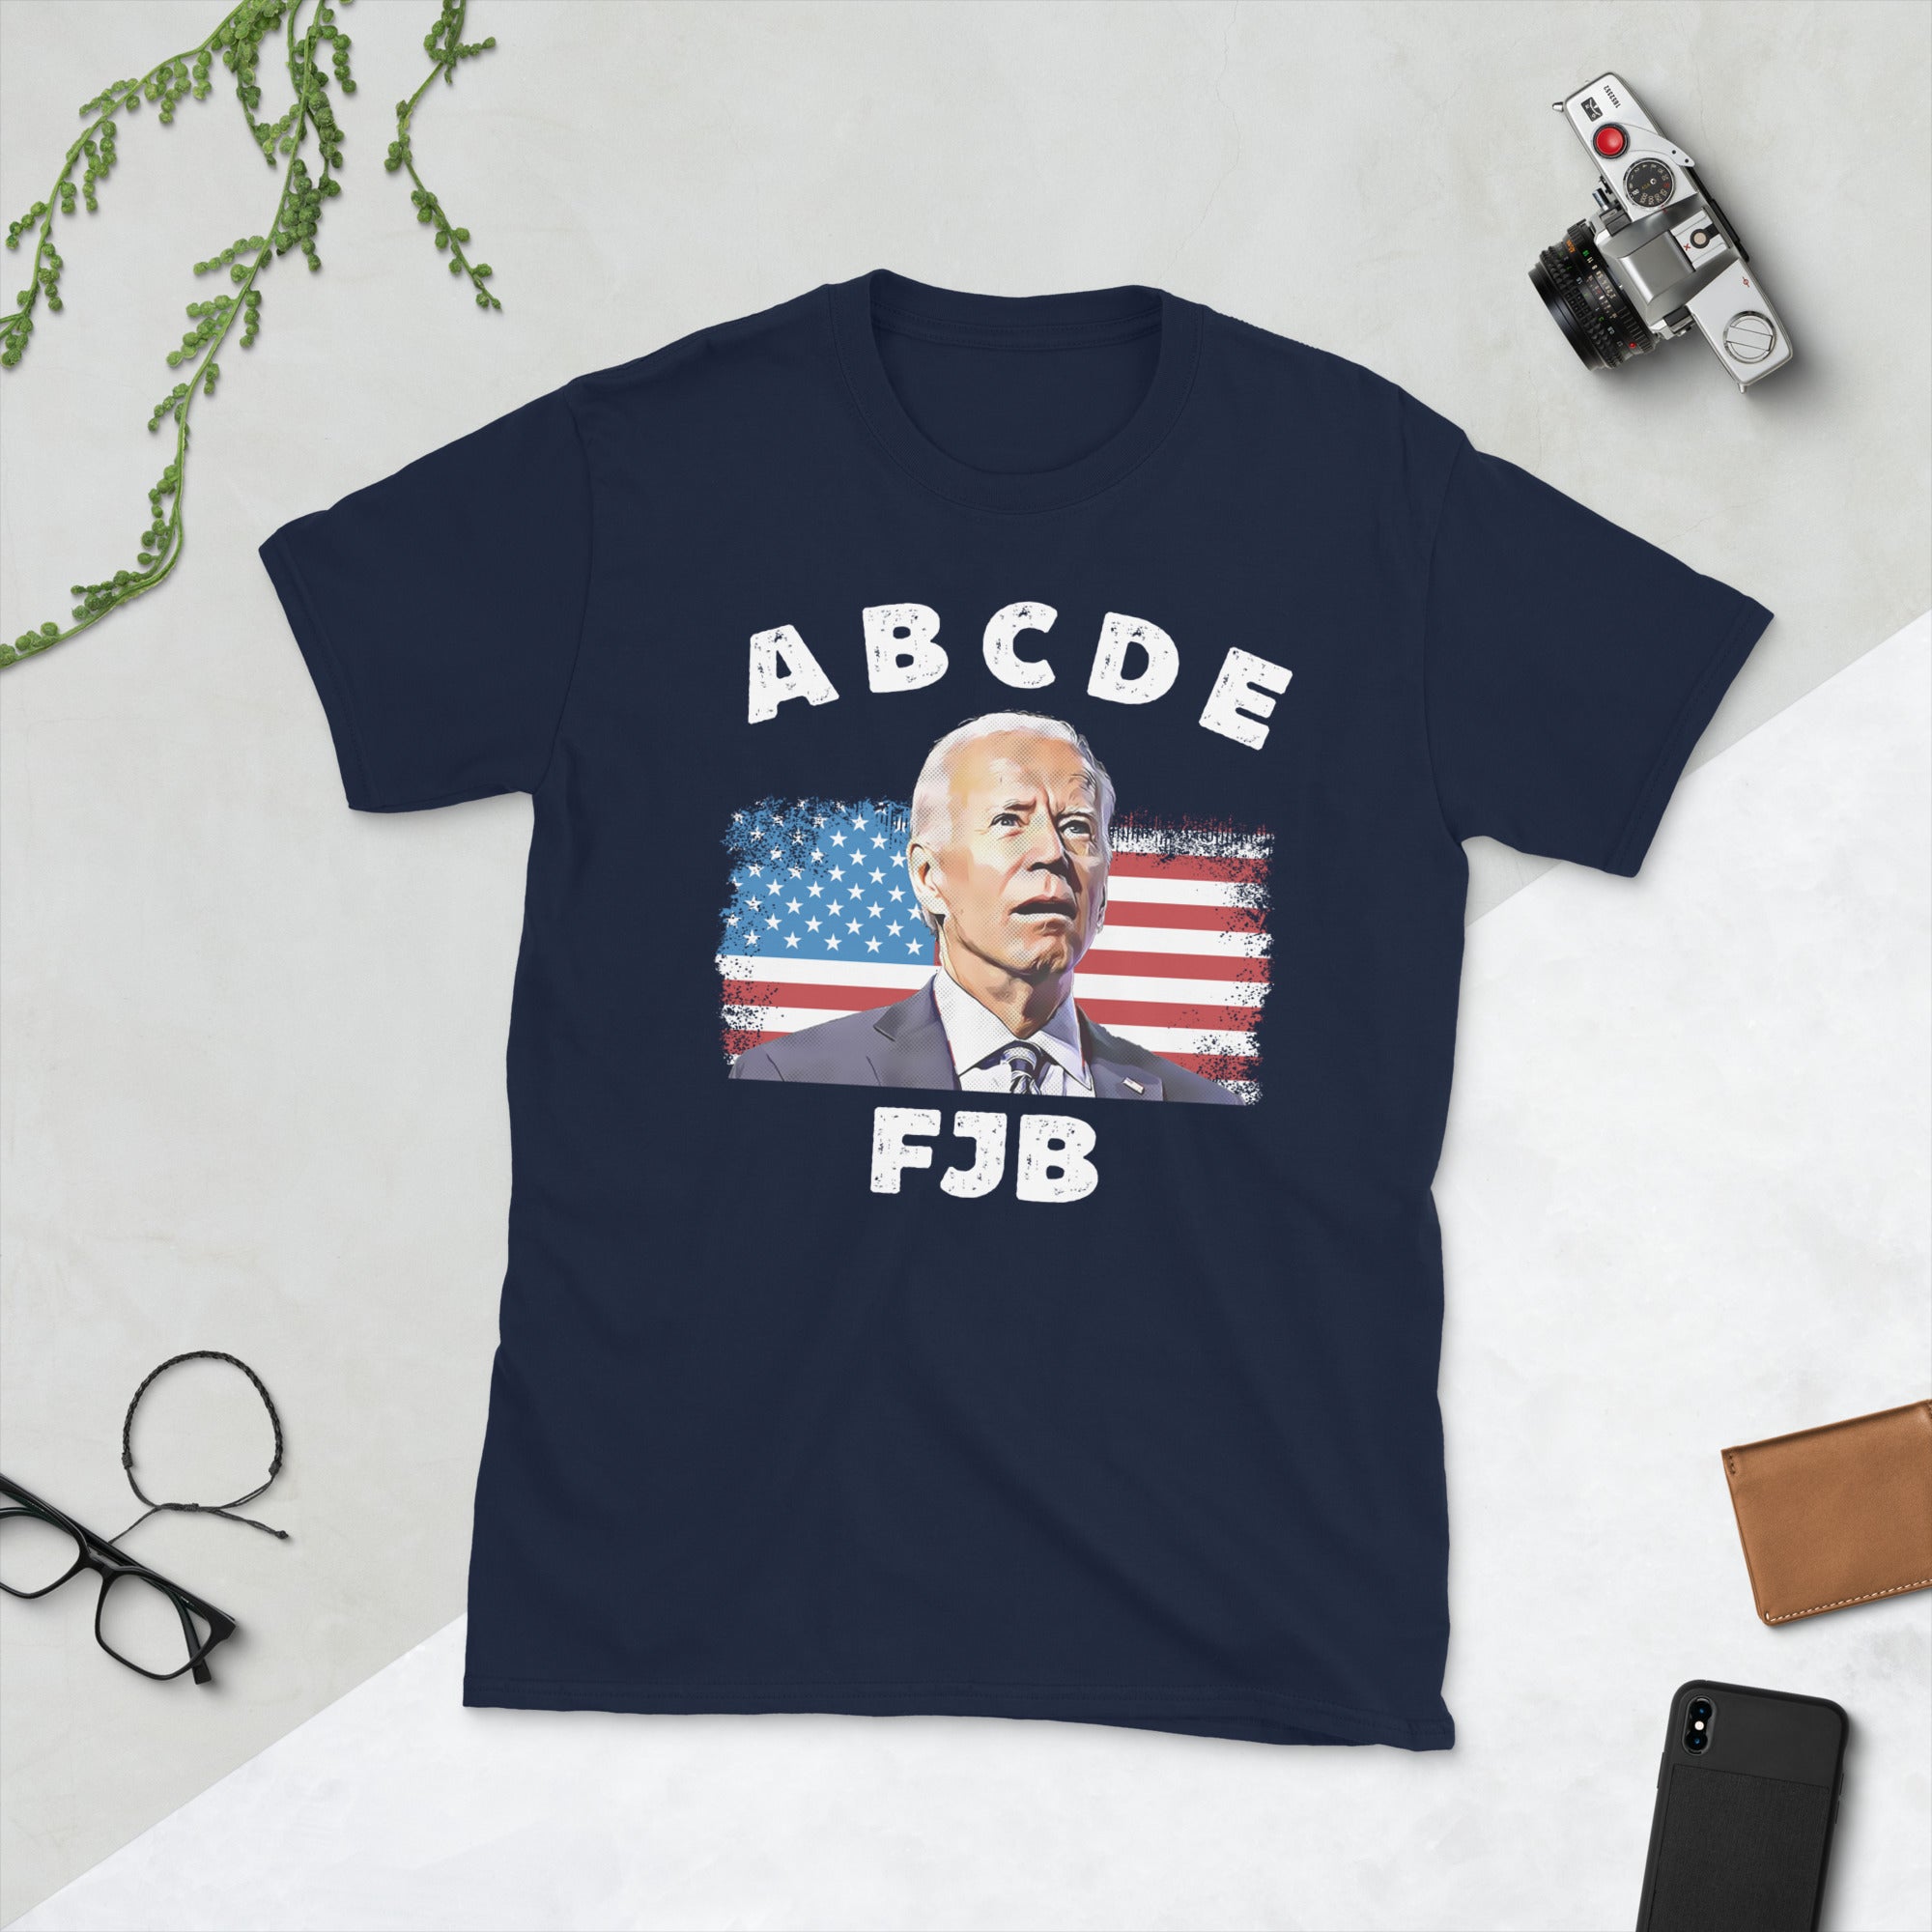 ABCDE FJB Shirt, Republican Shirt, Conservative Gifts, Anti Democrat Shirt, Anti Biden TShirt, Republican Gifts, Conservative Shirt, FJB Tee - Madeinsea©